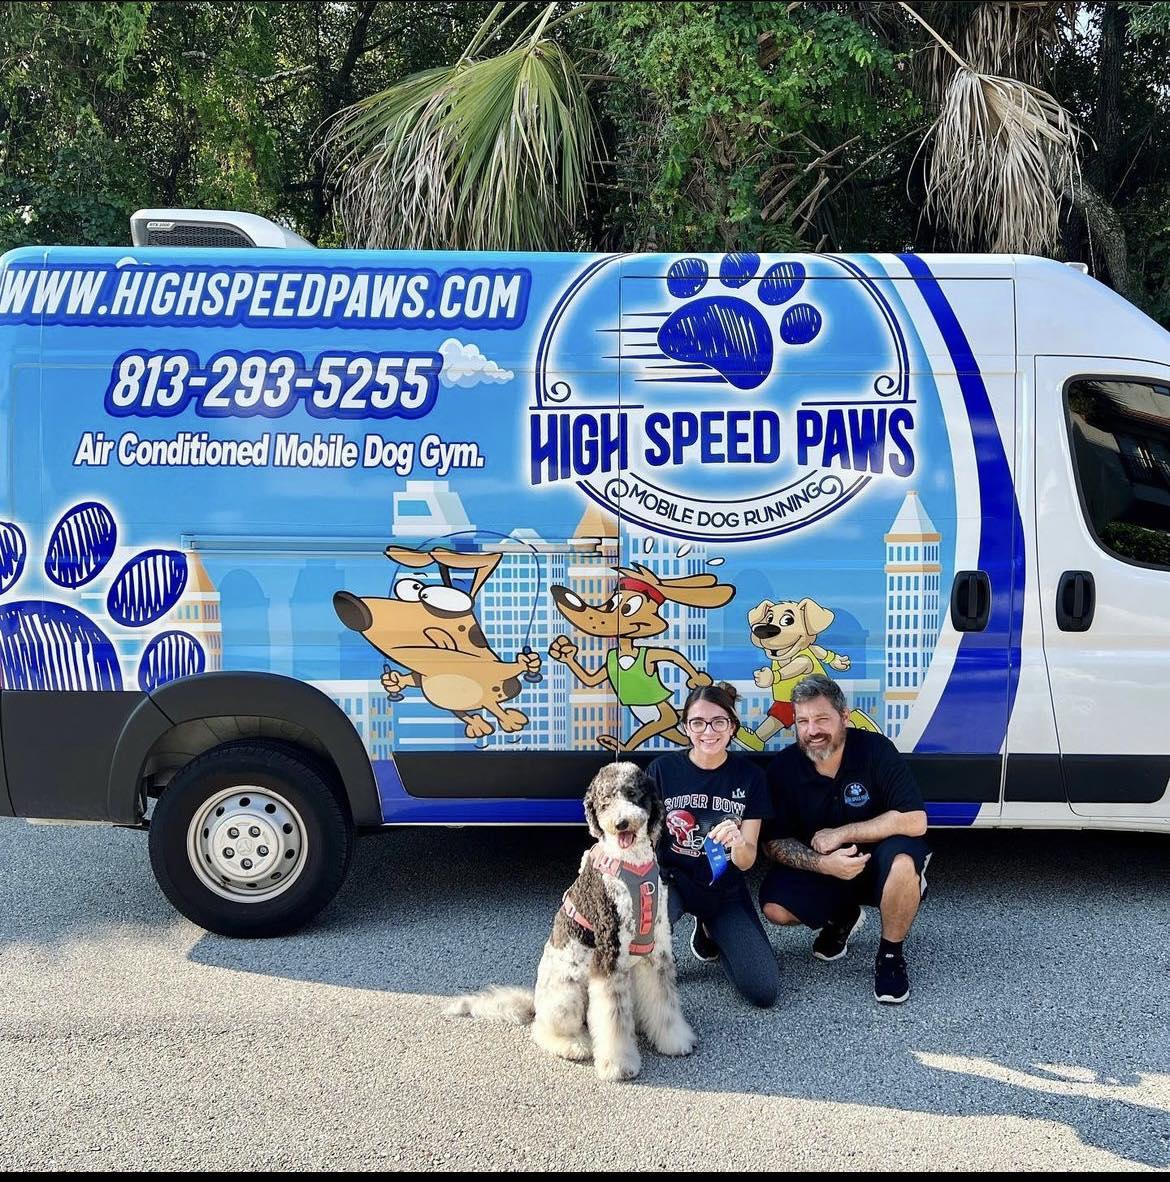 Pet Friendly High Speed Paws LLC